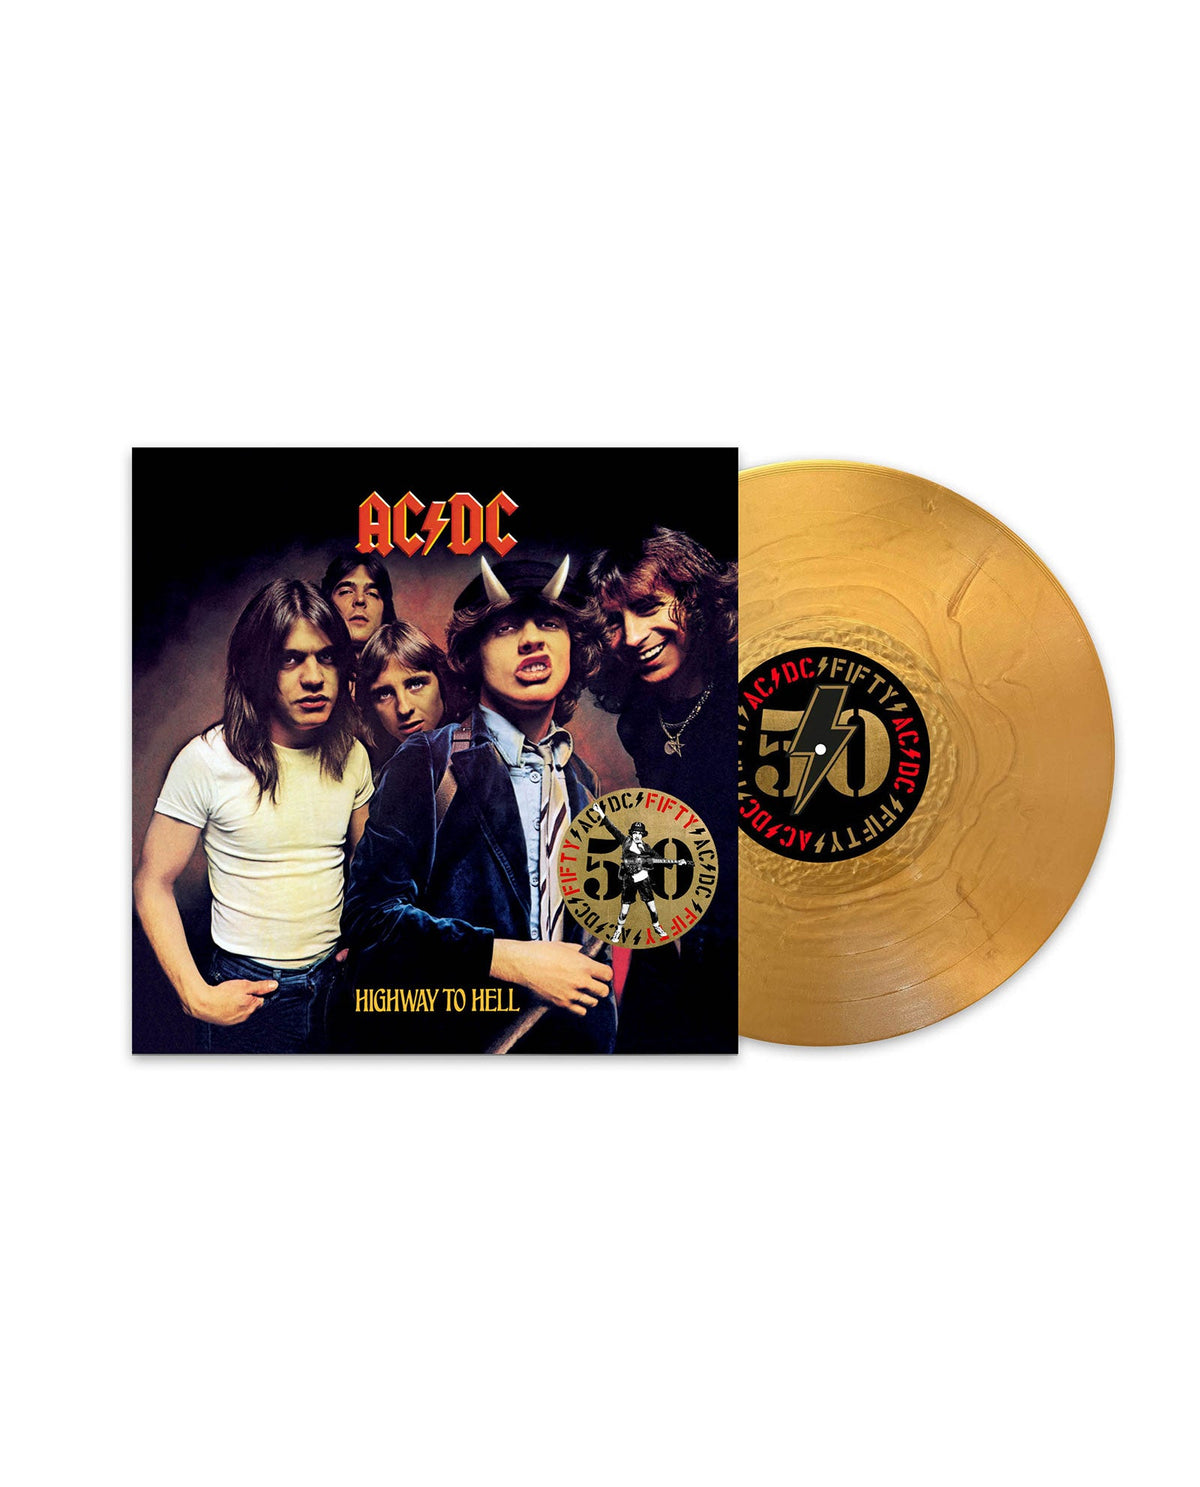 AC/DC - LP Vinilo Dorado "Highway to Hell" Ed. 50 aniversario - D2fy · Rocktud - Rocktud